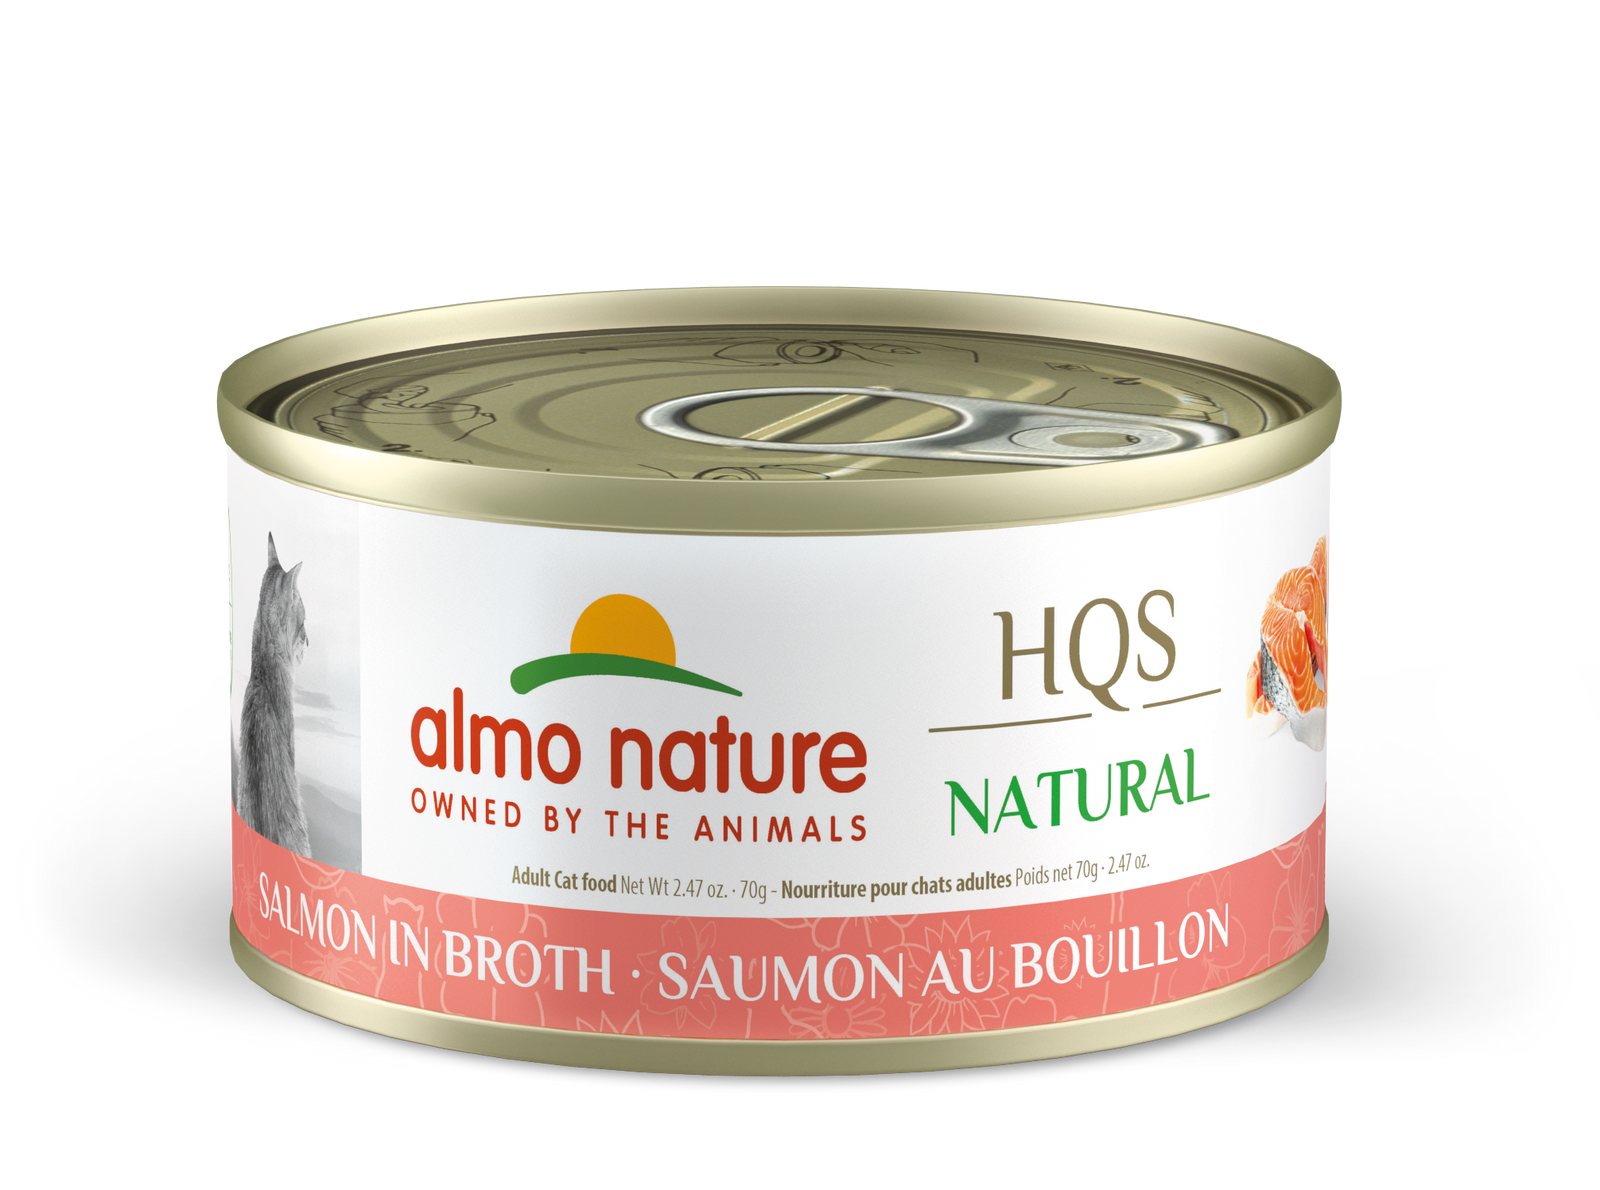 Almo Nature HQS Salmon in Broth